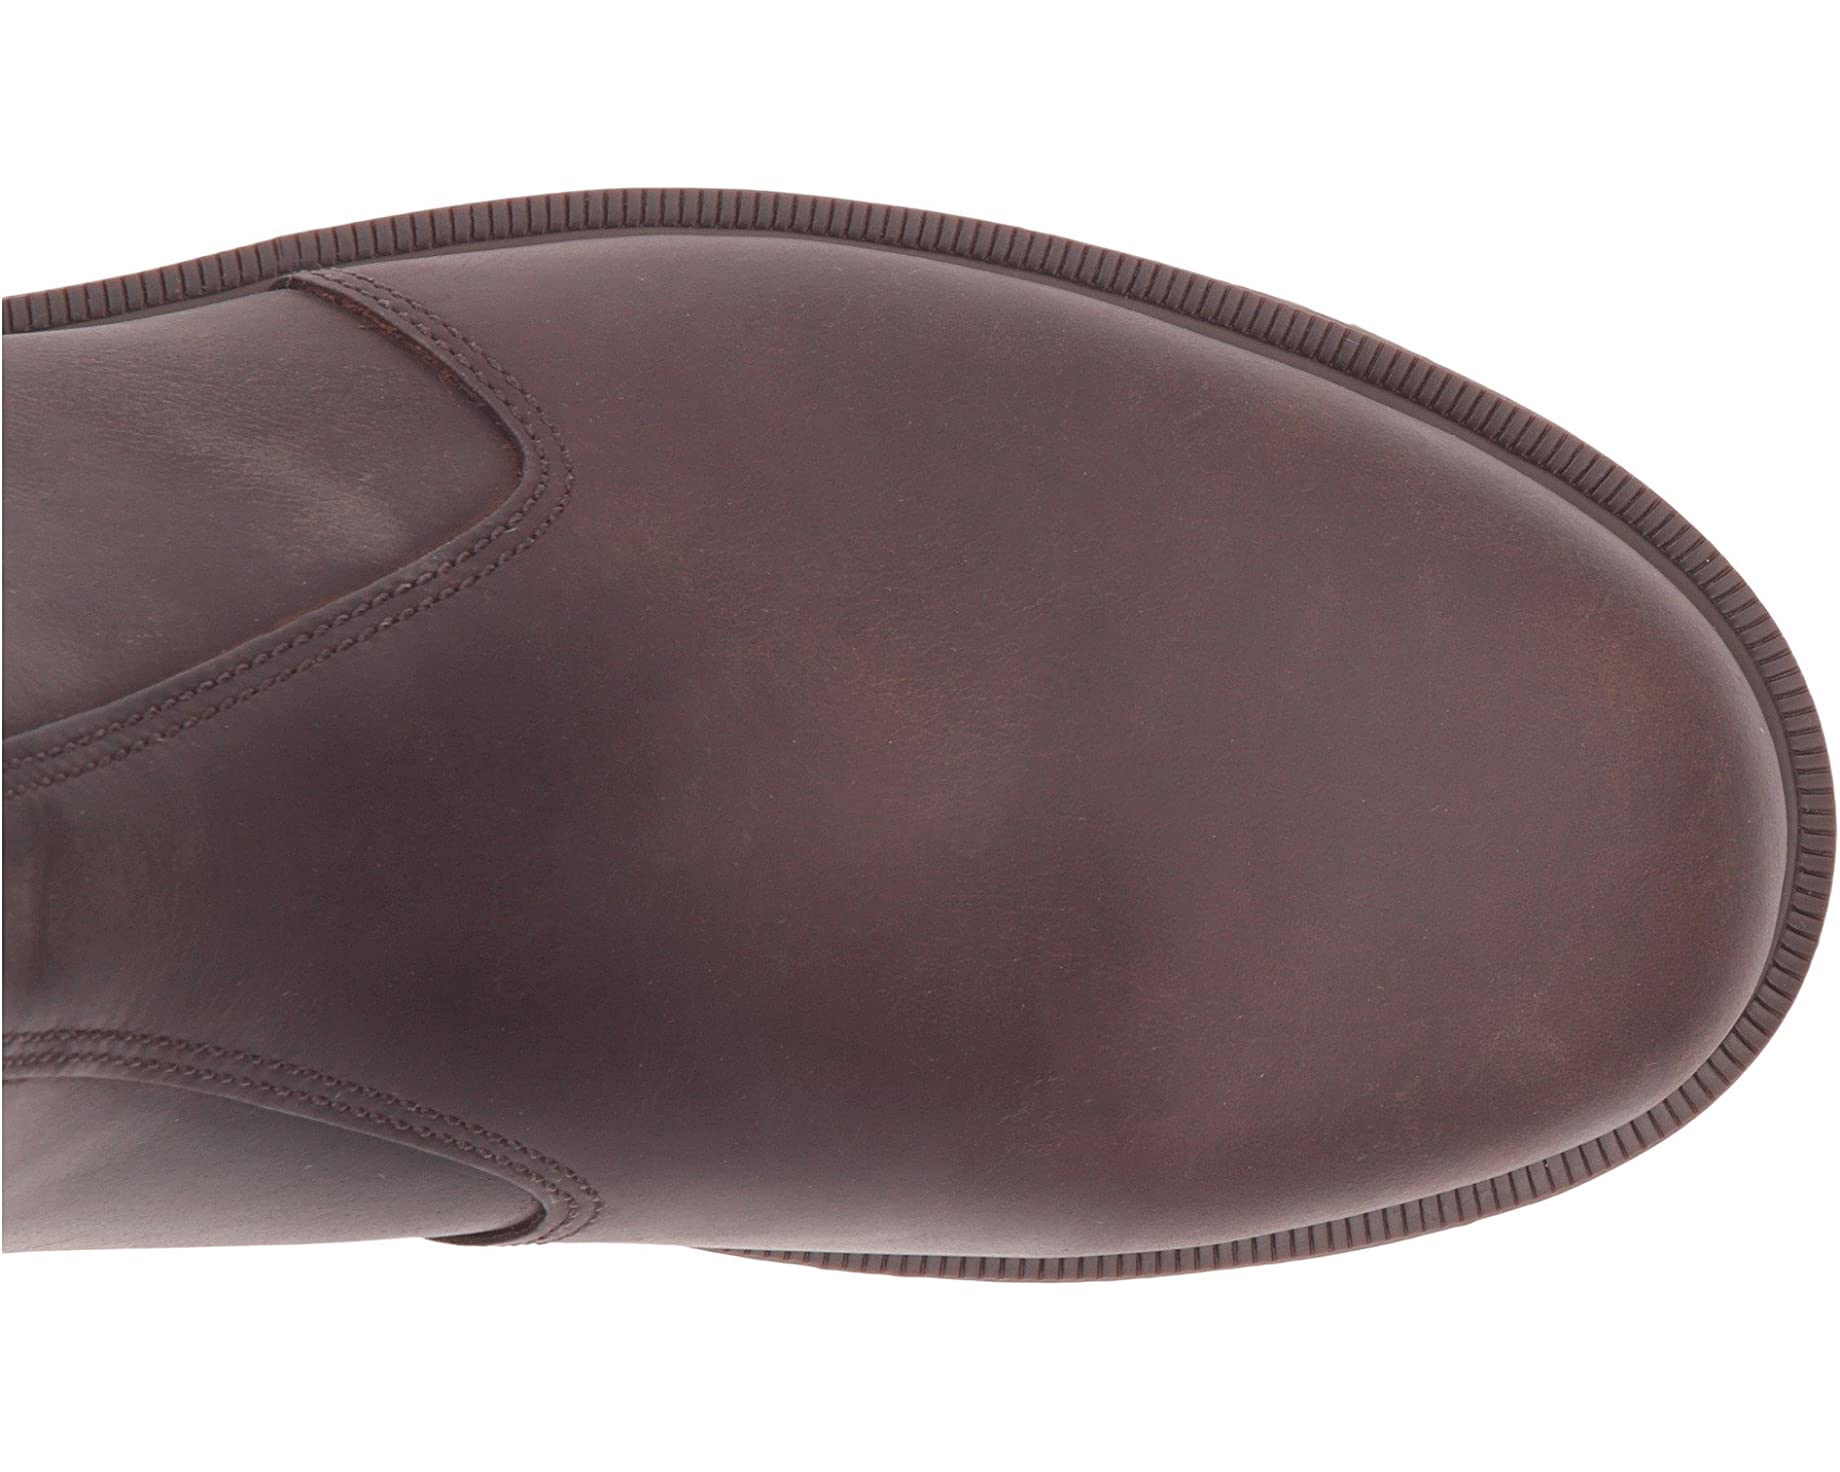 ботинки dr martens размер 7 коричневый Ботинки 2976 Chelsea Boot Dr. Martens, коричневый